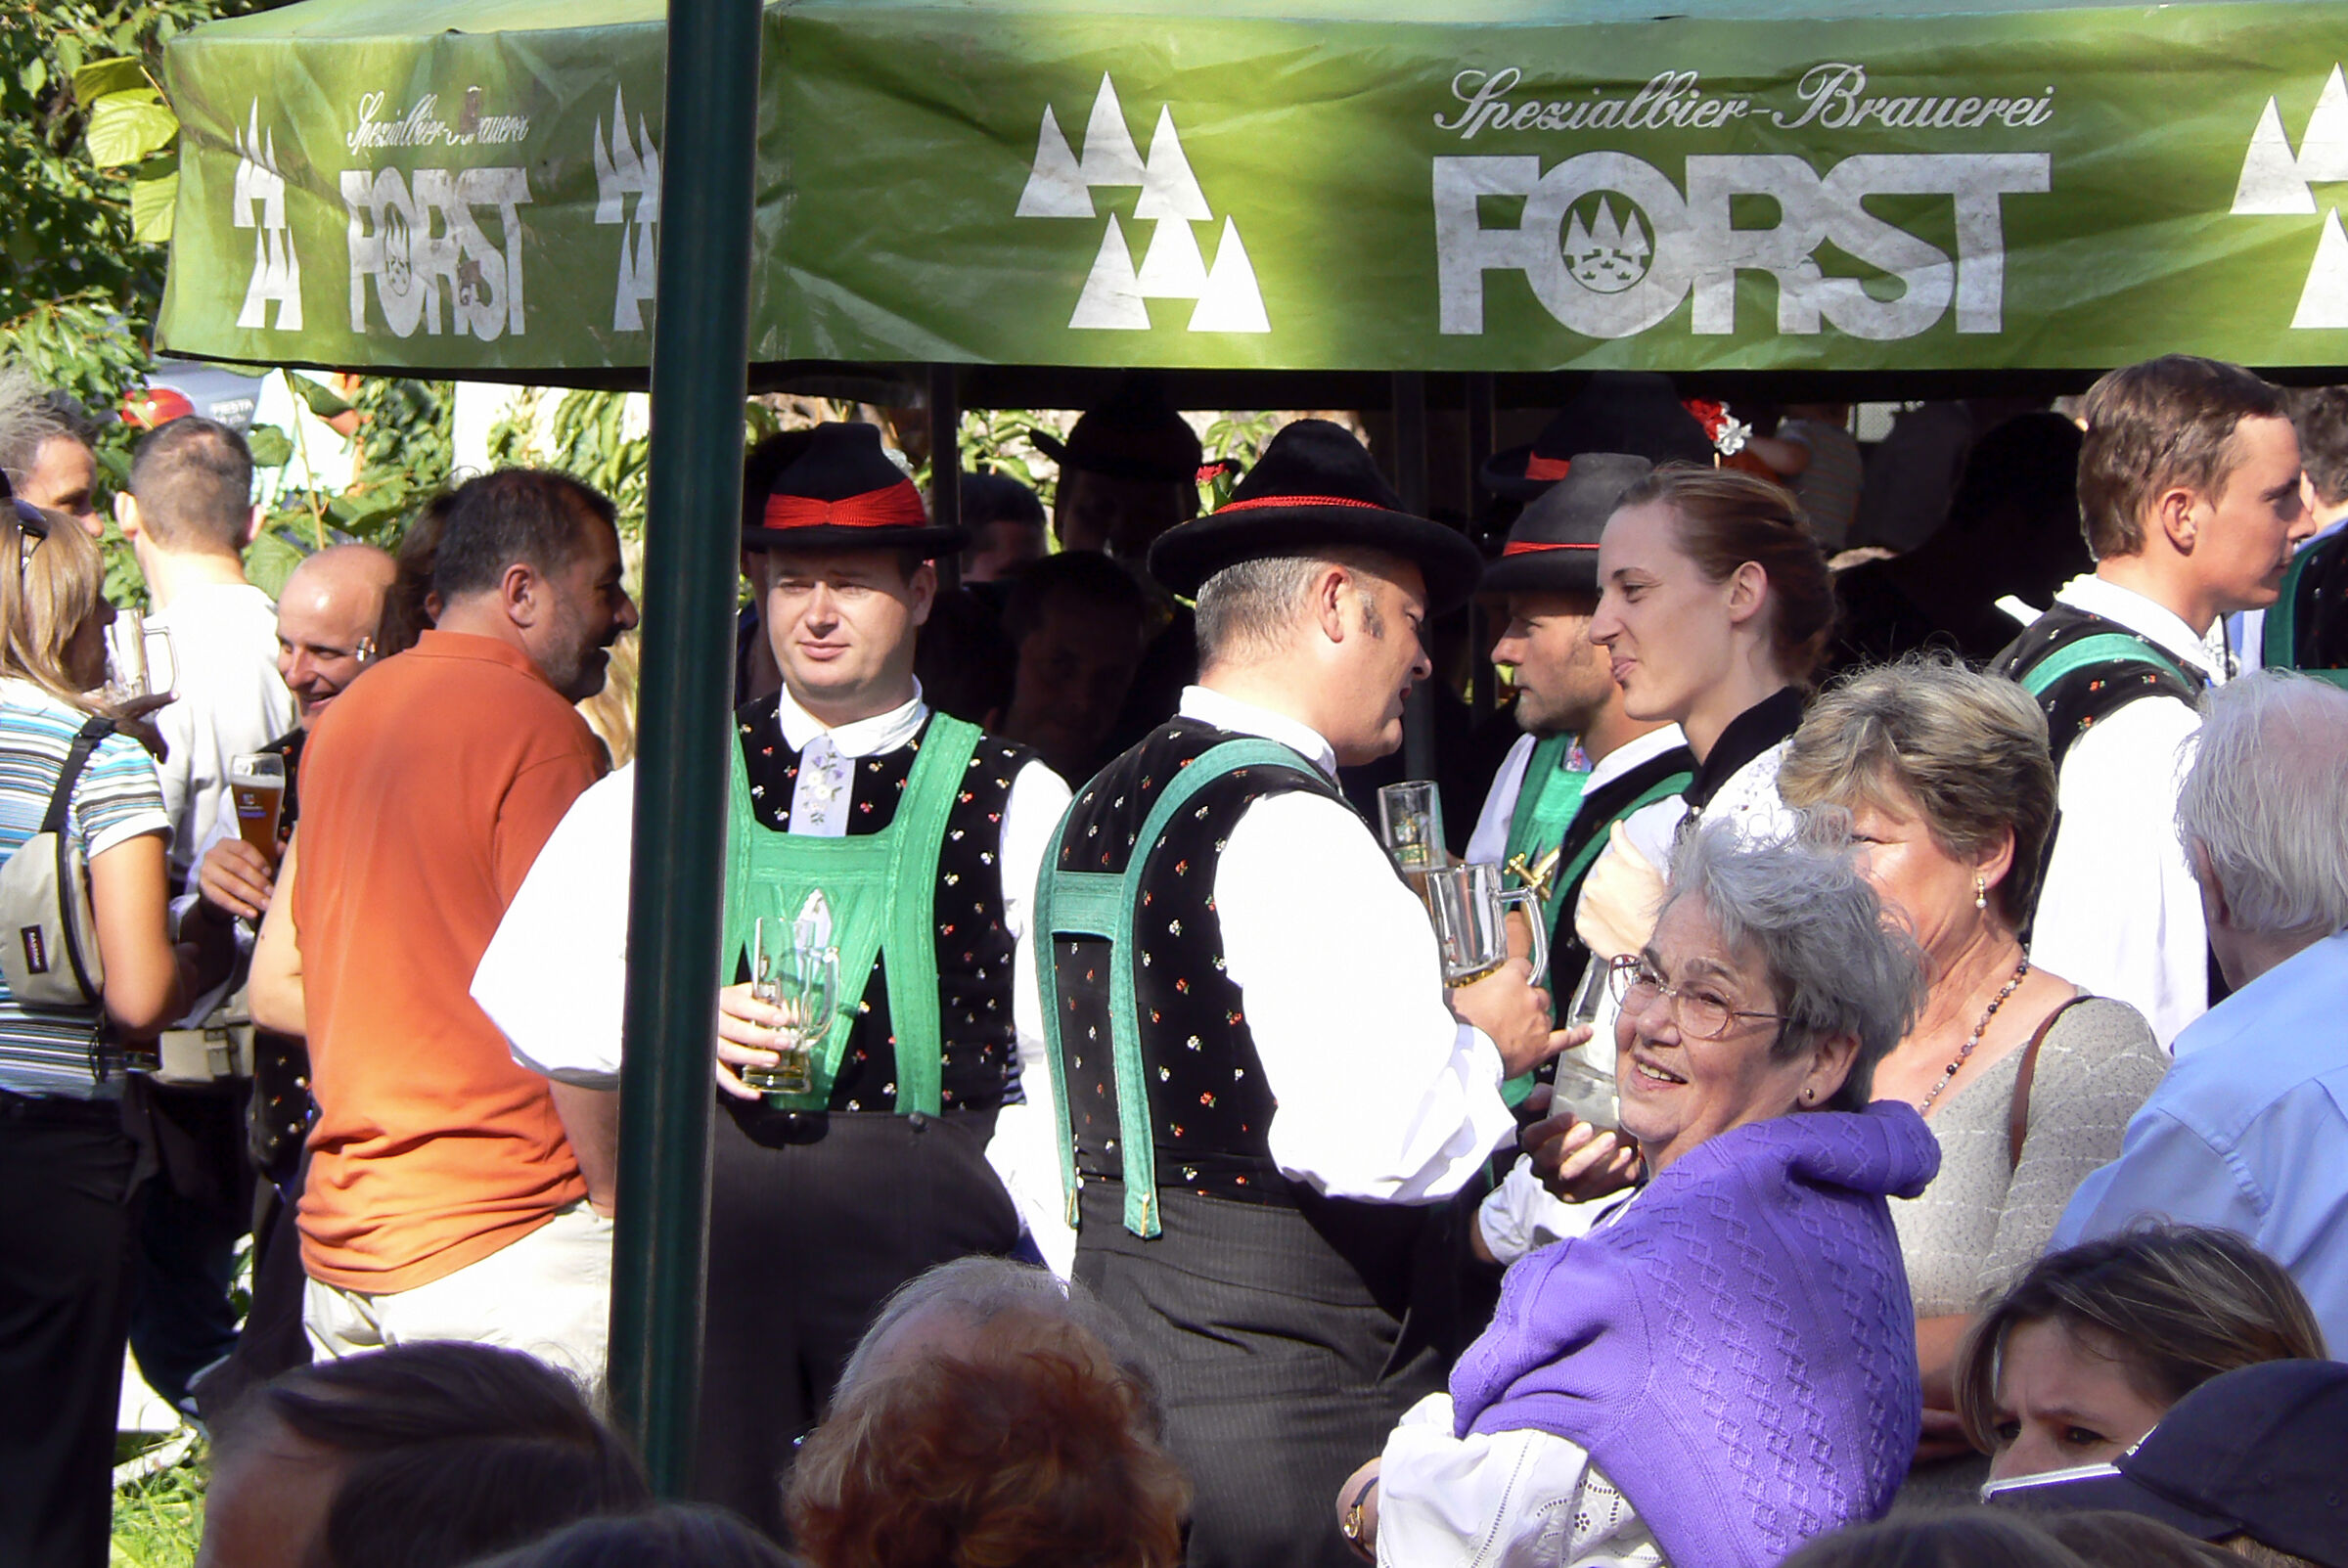 South Tyrol - beer festival...